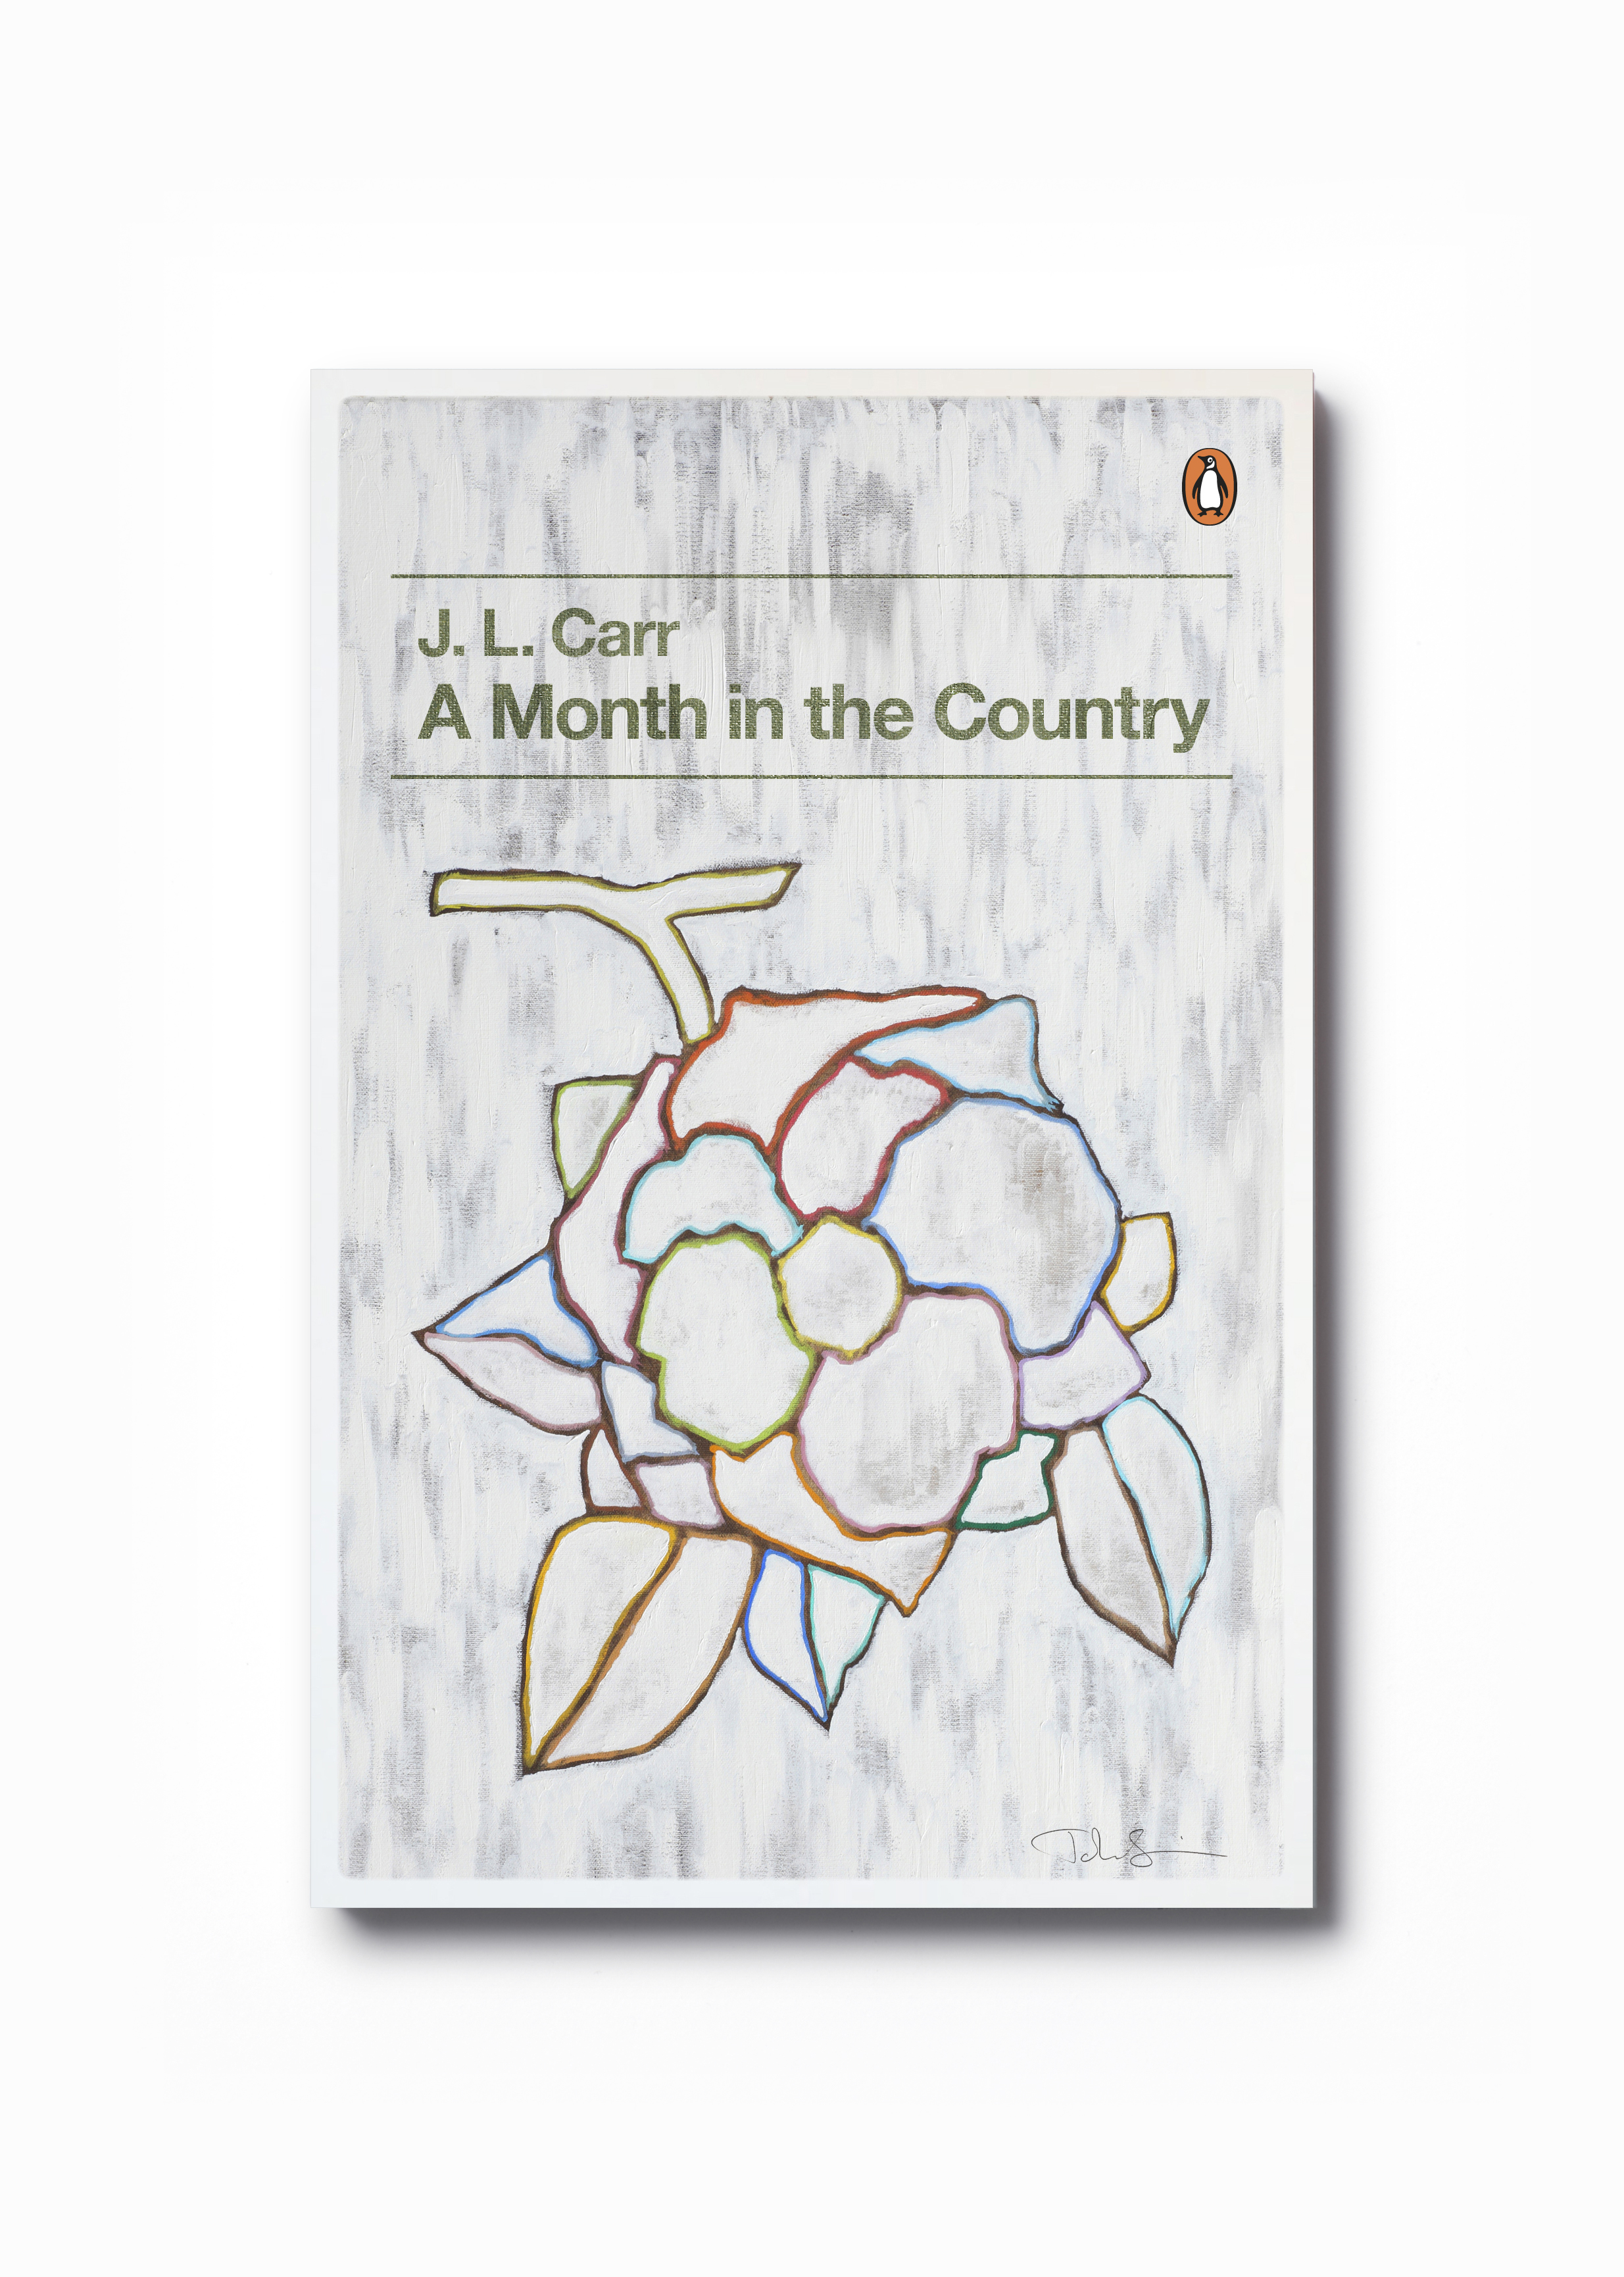  A Month in the Country by J. L. Carr&nbsp; (Penguin Decades series) - Art: John Squire Design: Jim Stoddart  &nbsp;&nbsp; 